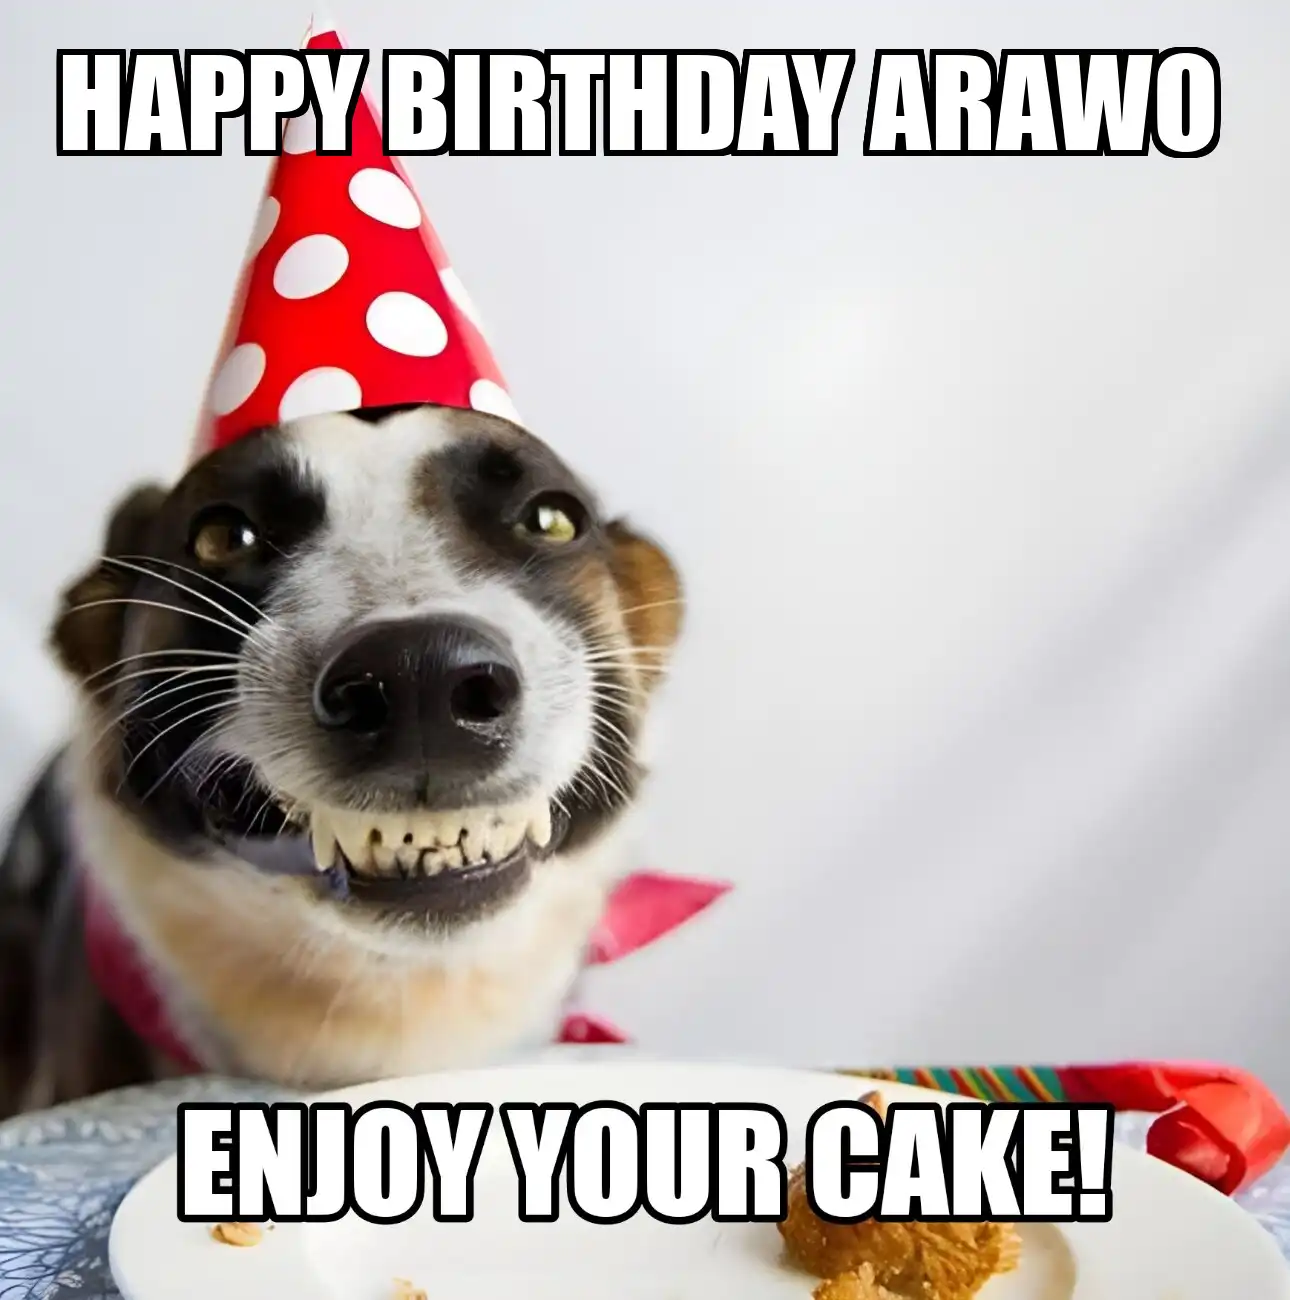 Happy Birthday Arawo Enjoy Your Cake Dog Meme